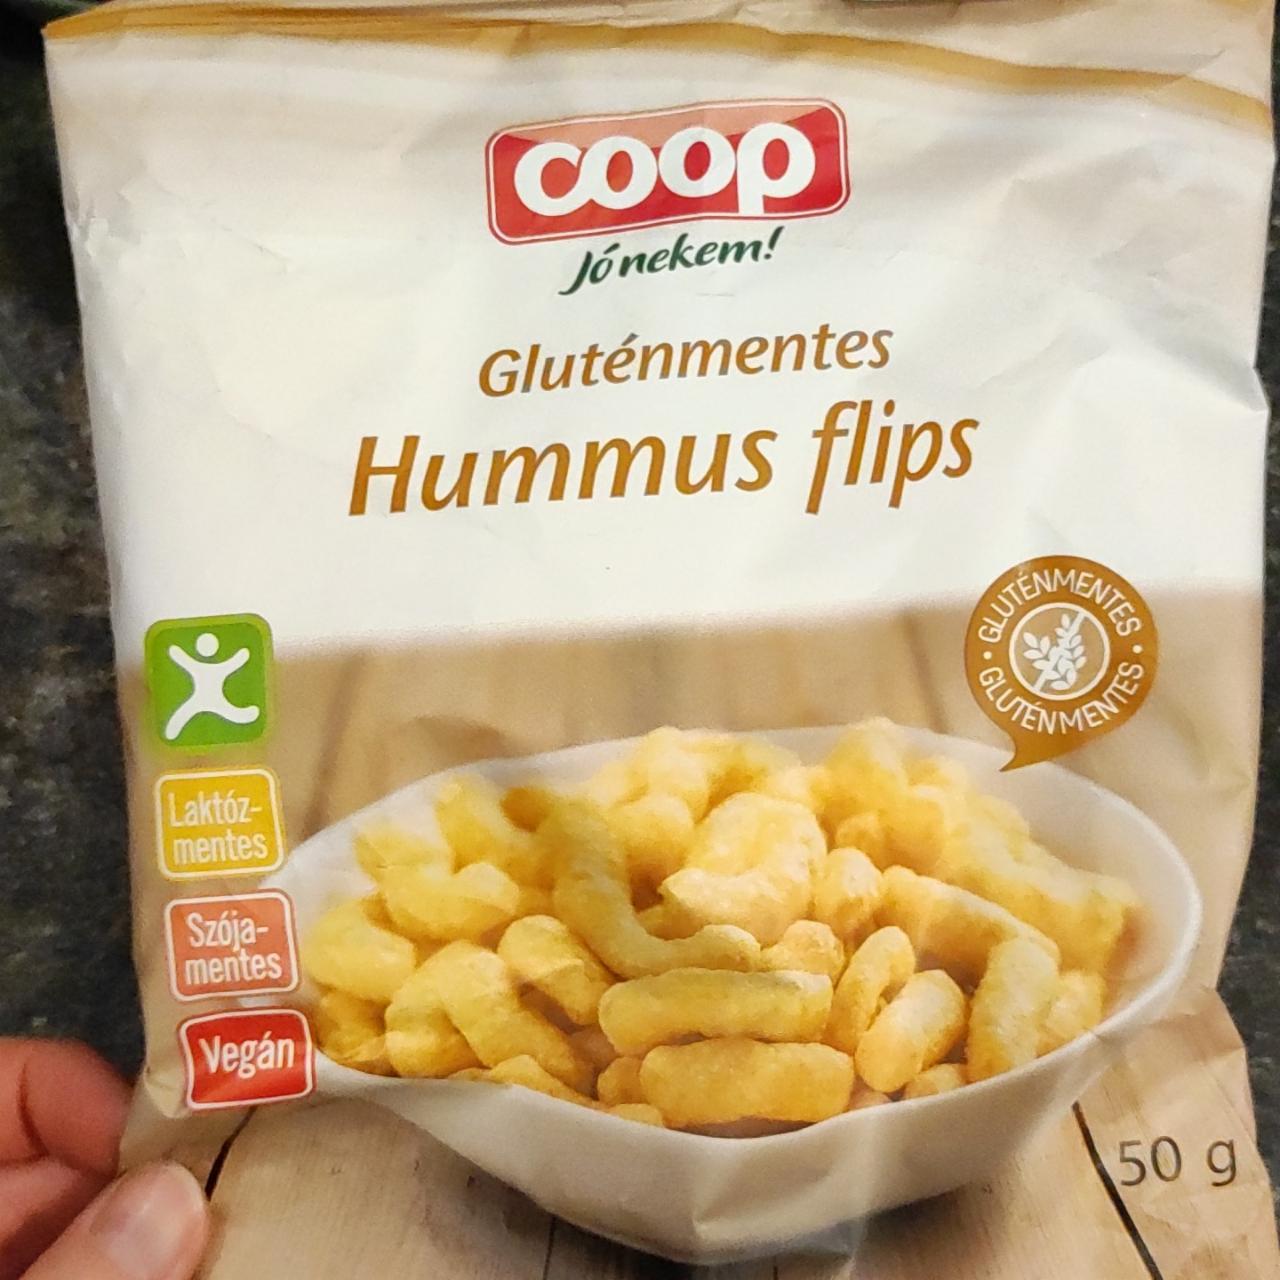 Képek - Gluténmentes hummus flips Coop